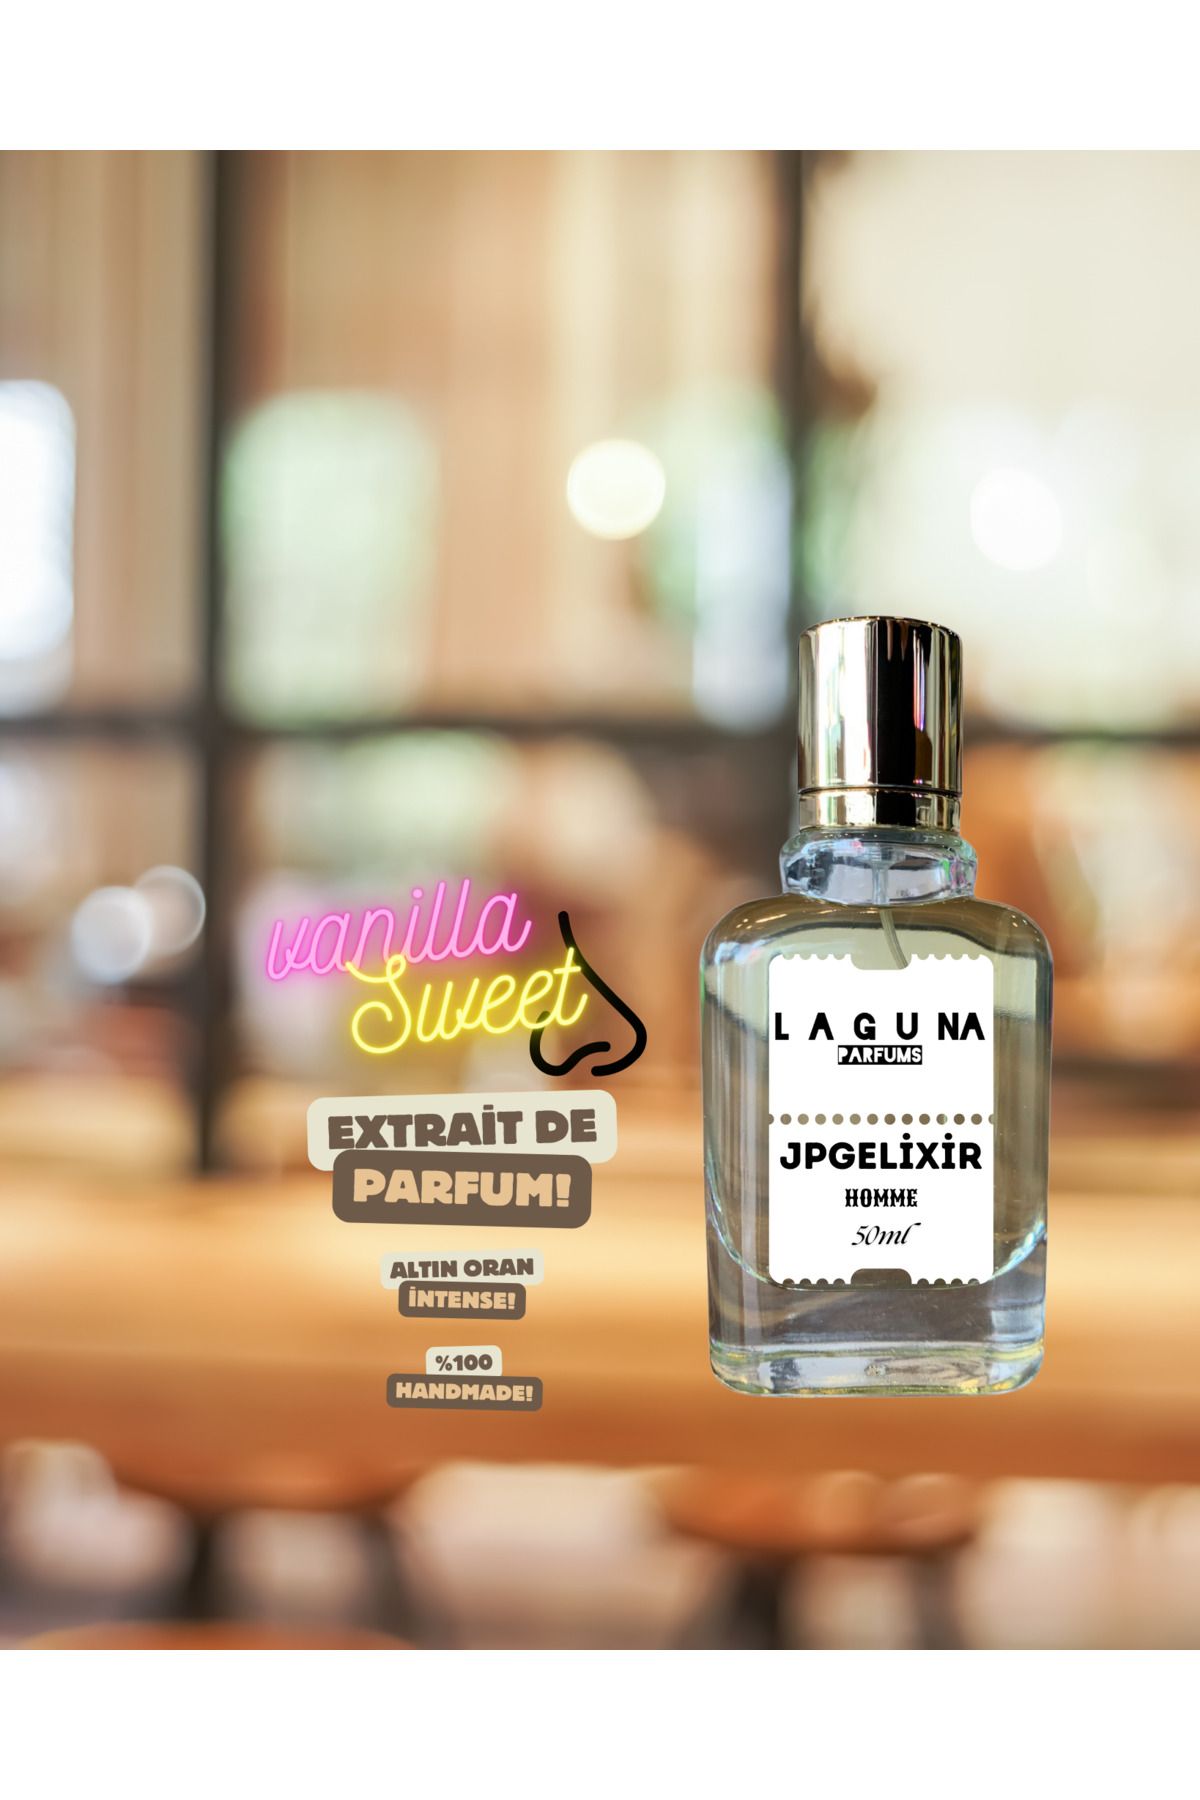 Laguna Jpgelixir Erkek Parfüm-extrait De Parfum 50ml